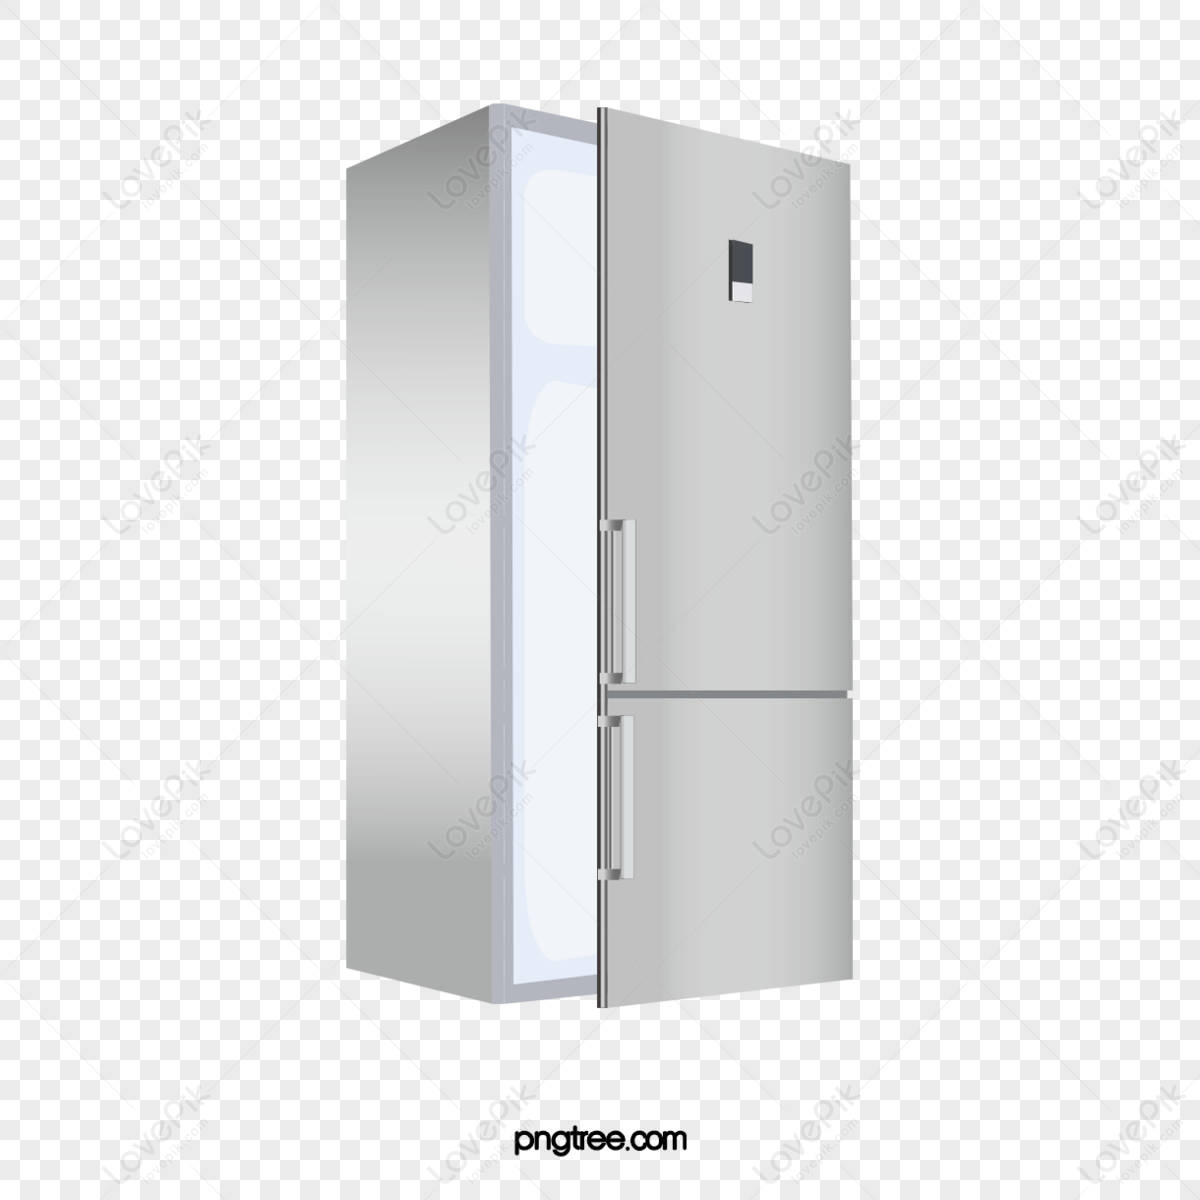 Red Refrigerator PNG Images & PSDs for Download